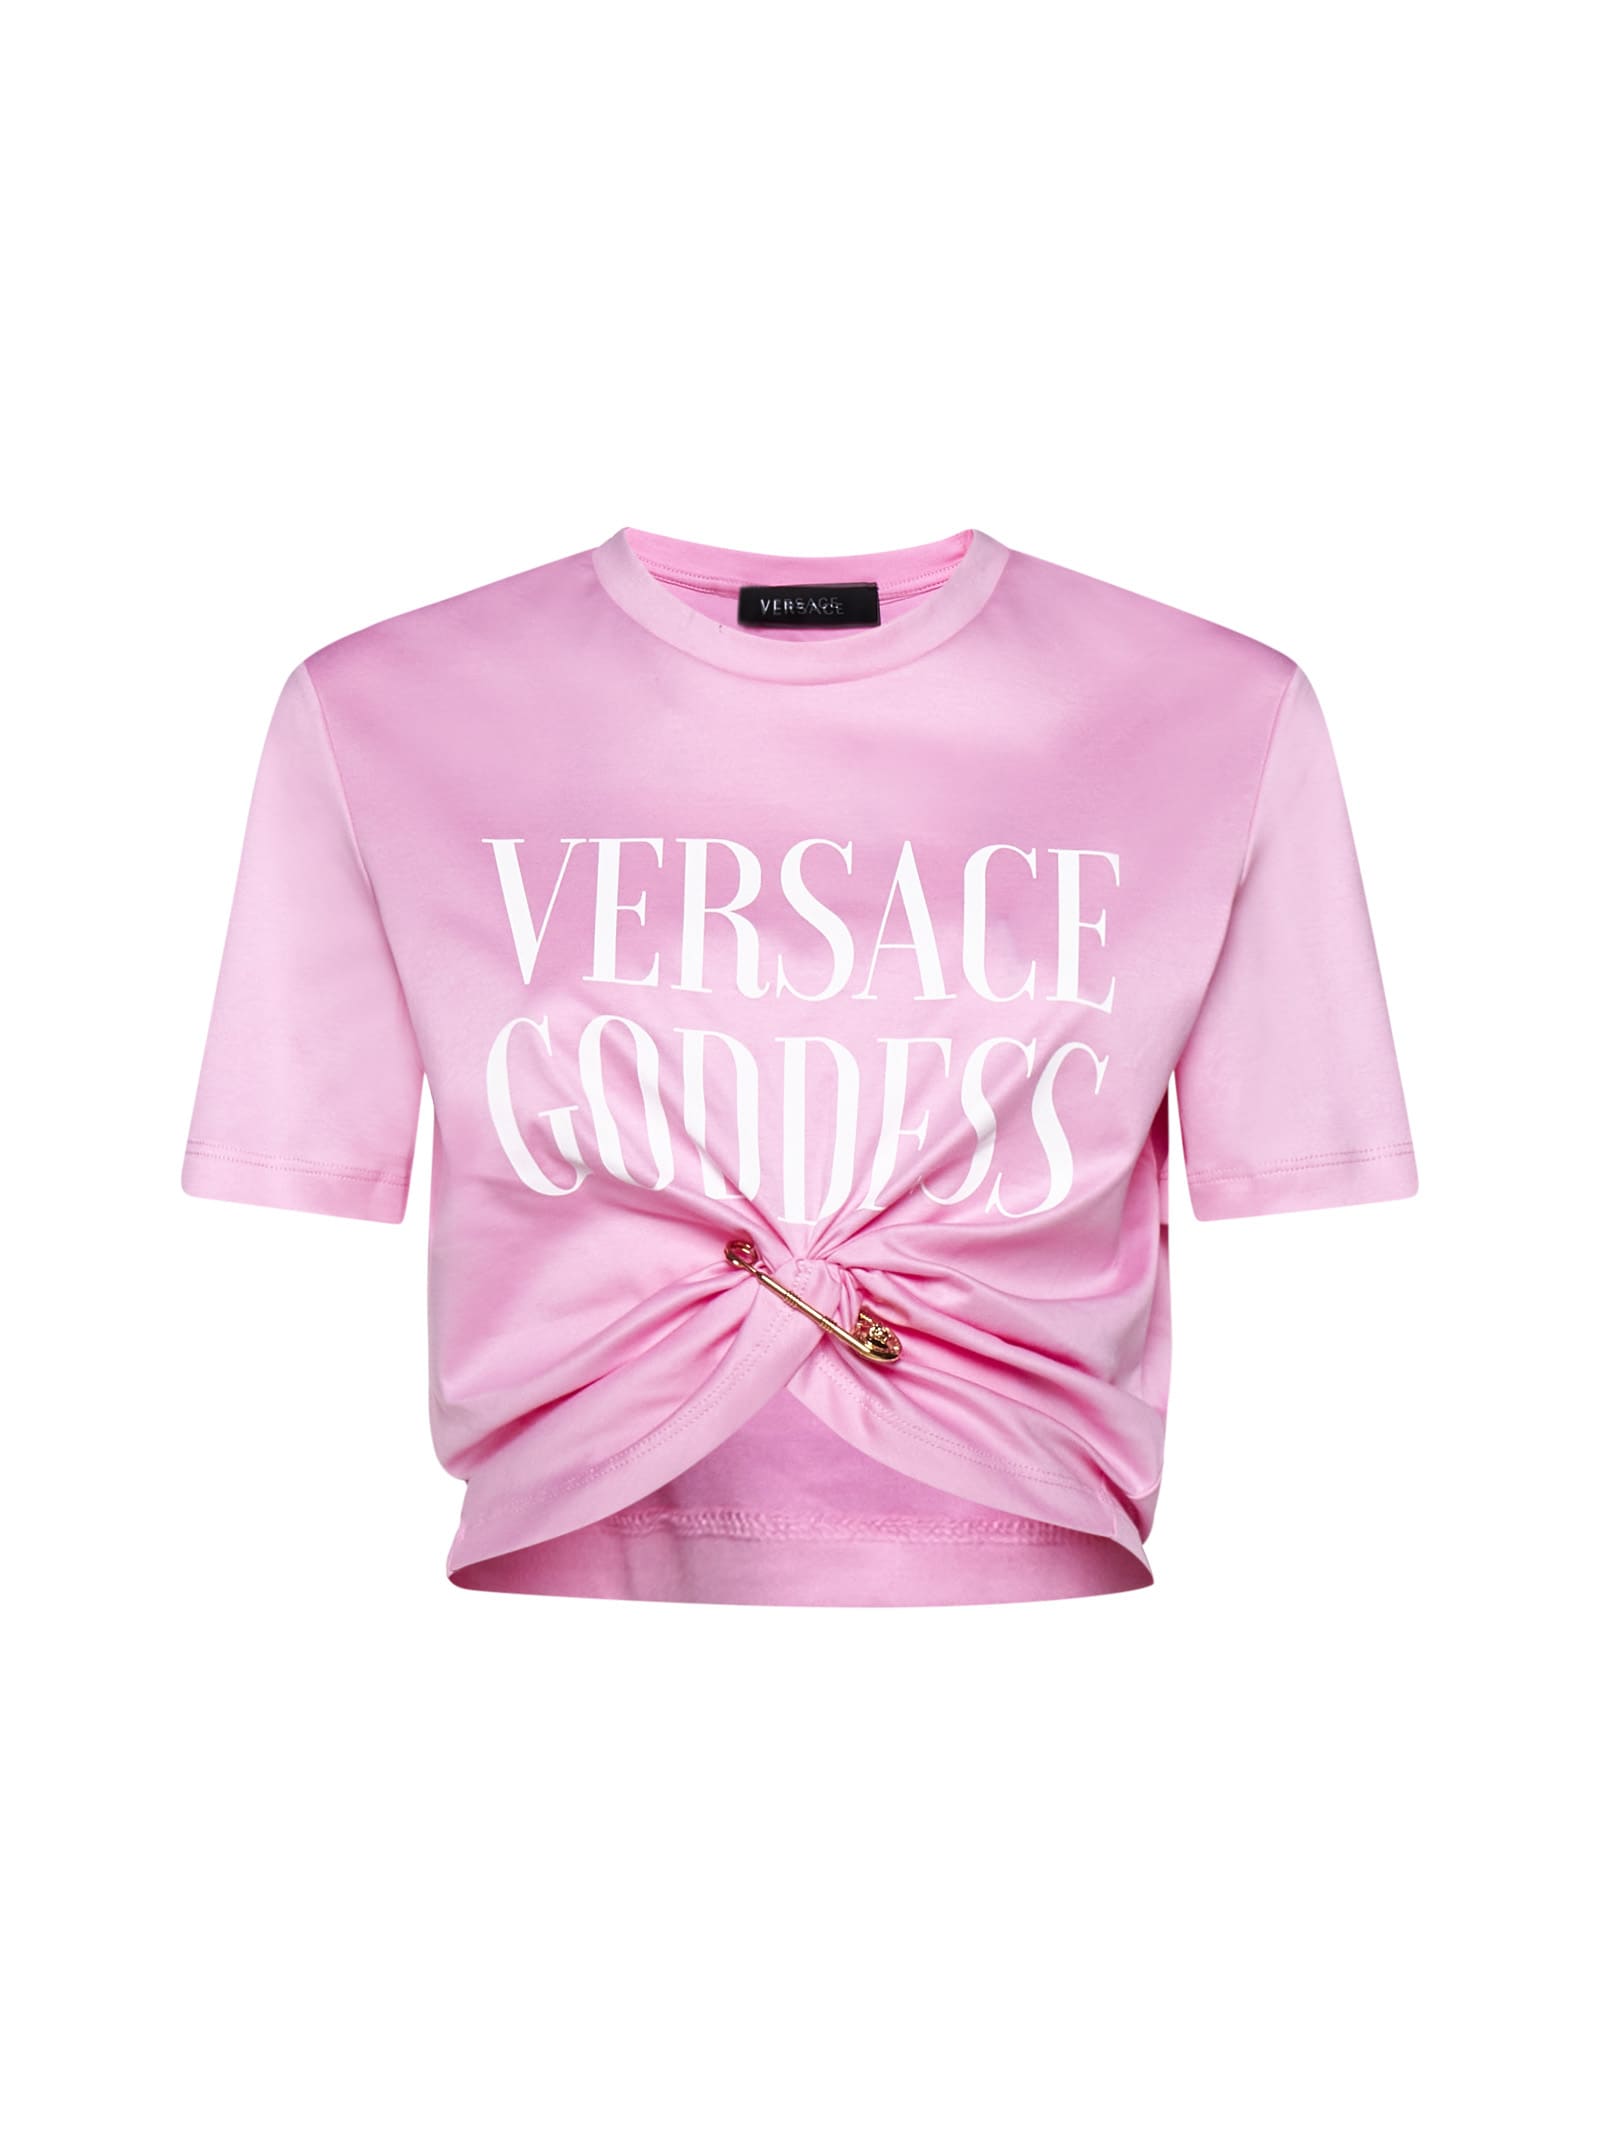 VERSACE Jersey Goddess T-shirt in Pink Paradise